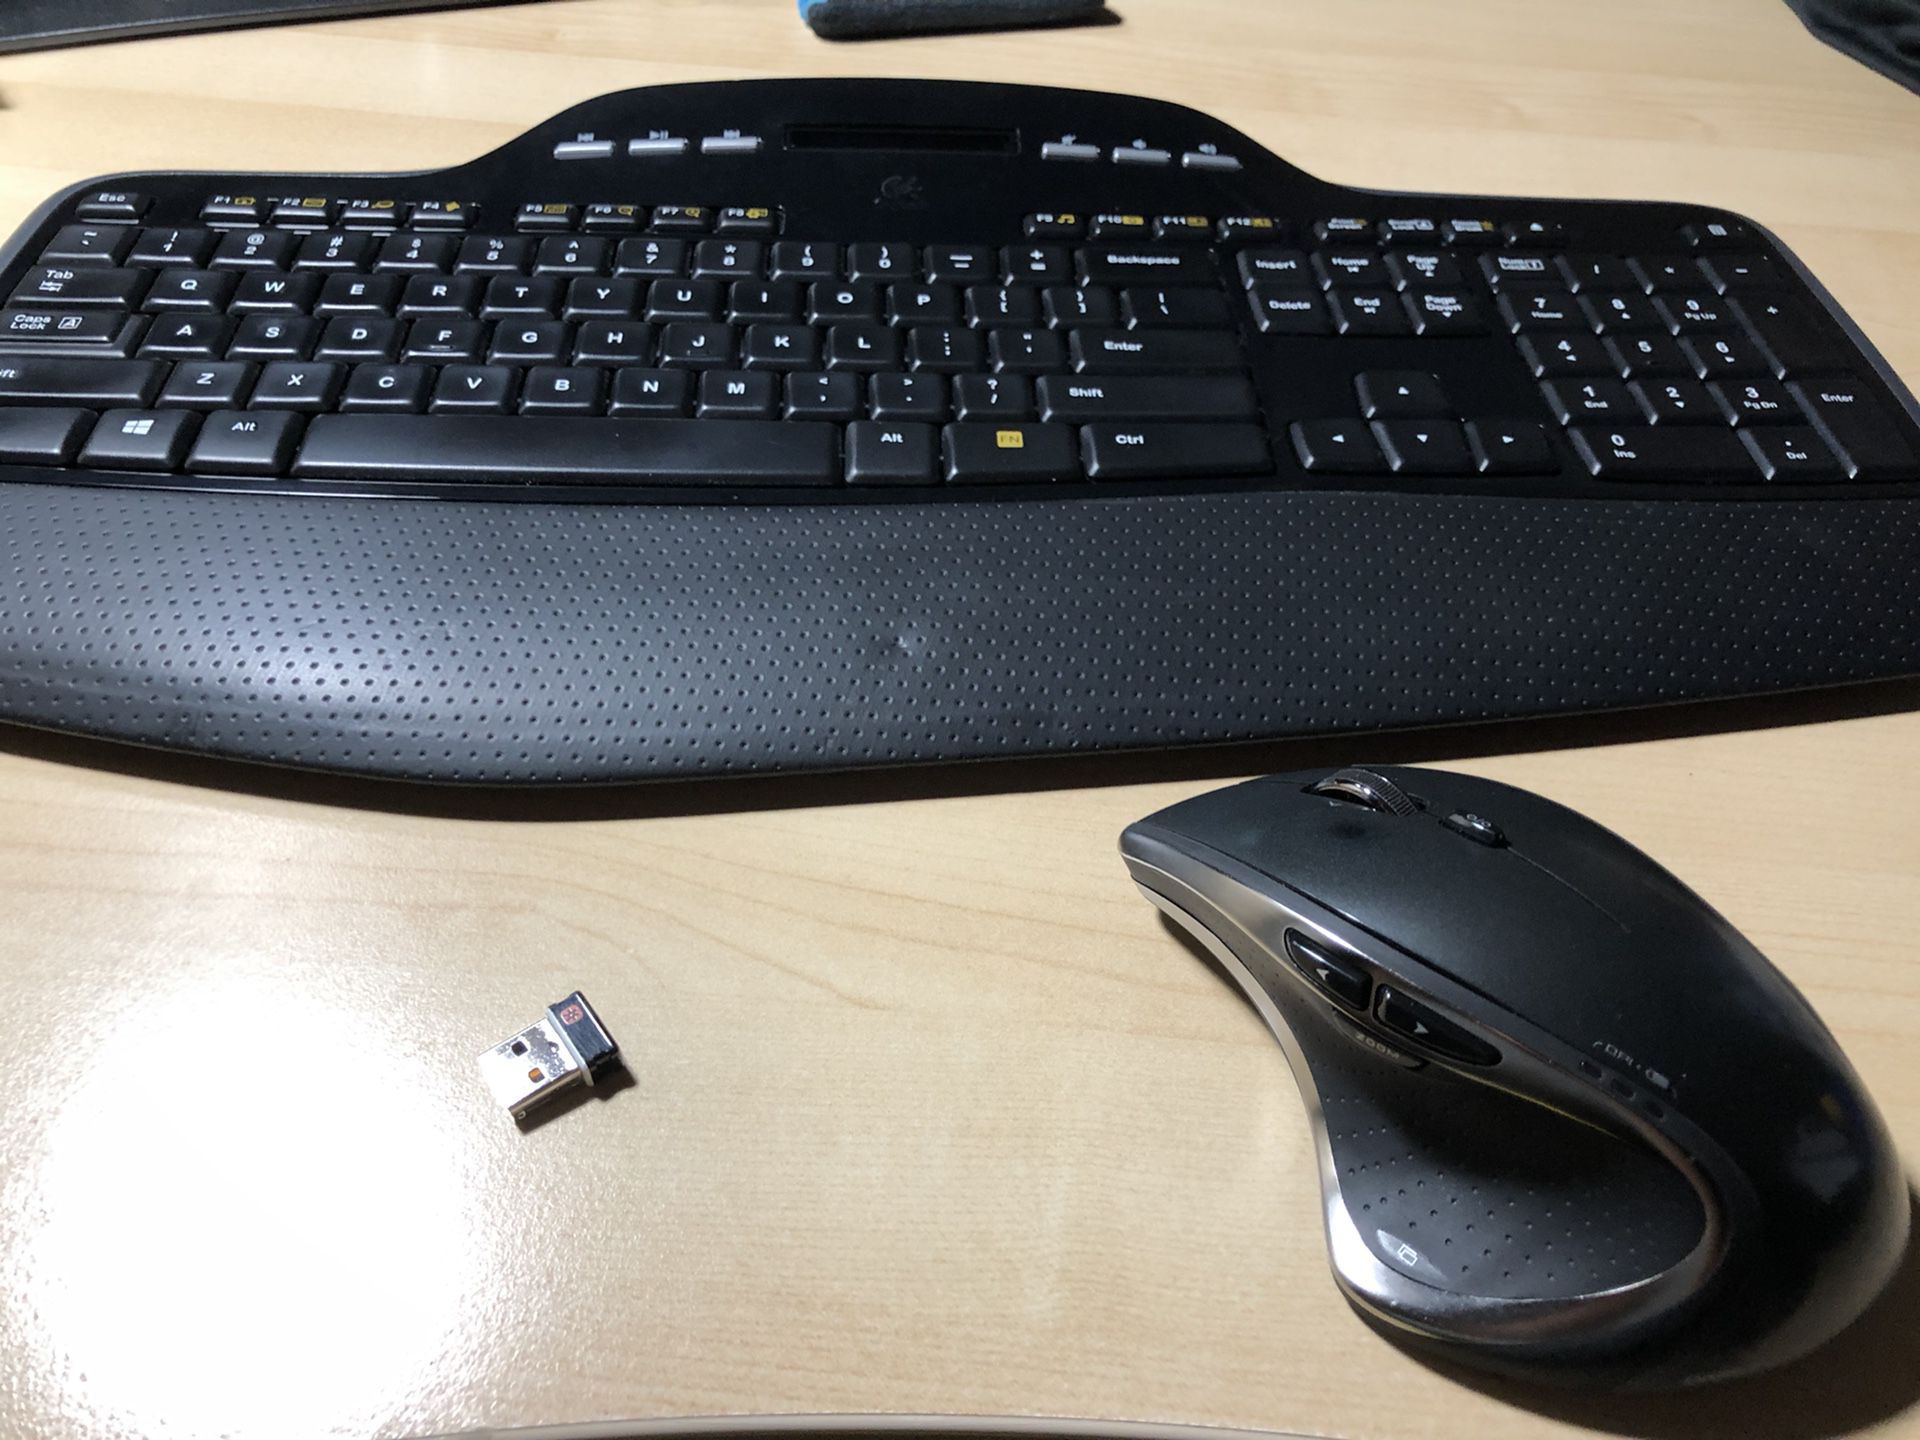 Logitech Performance MX Wireless Mouse, MK710 Wireless Keyboard and USB Receiver